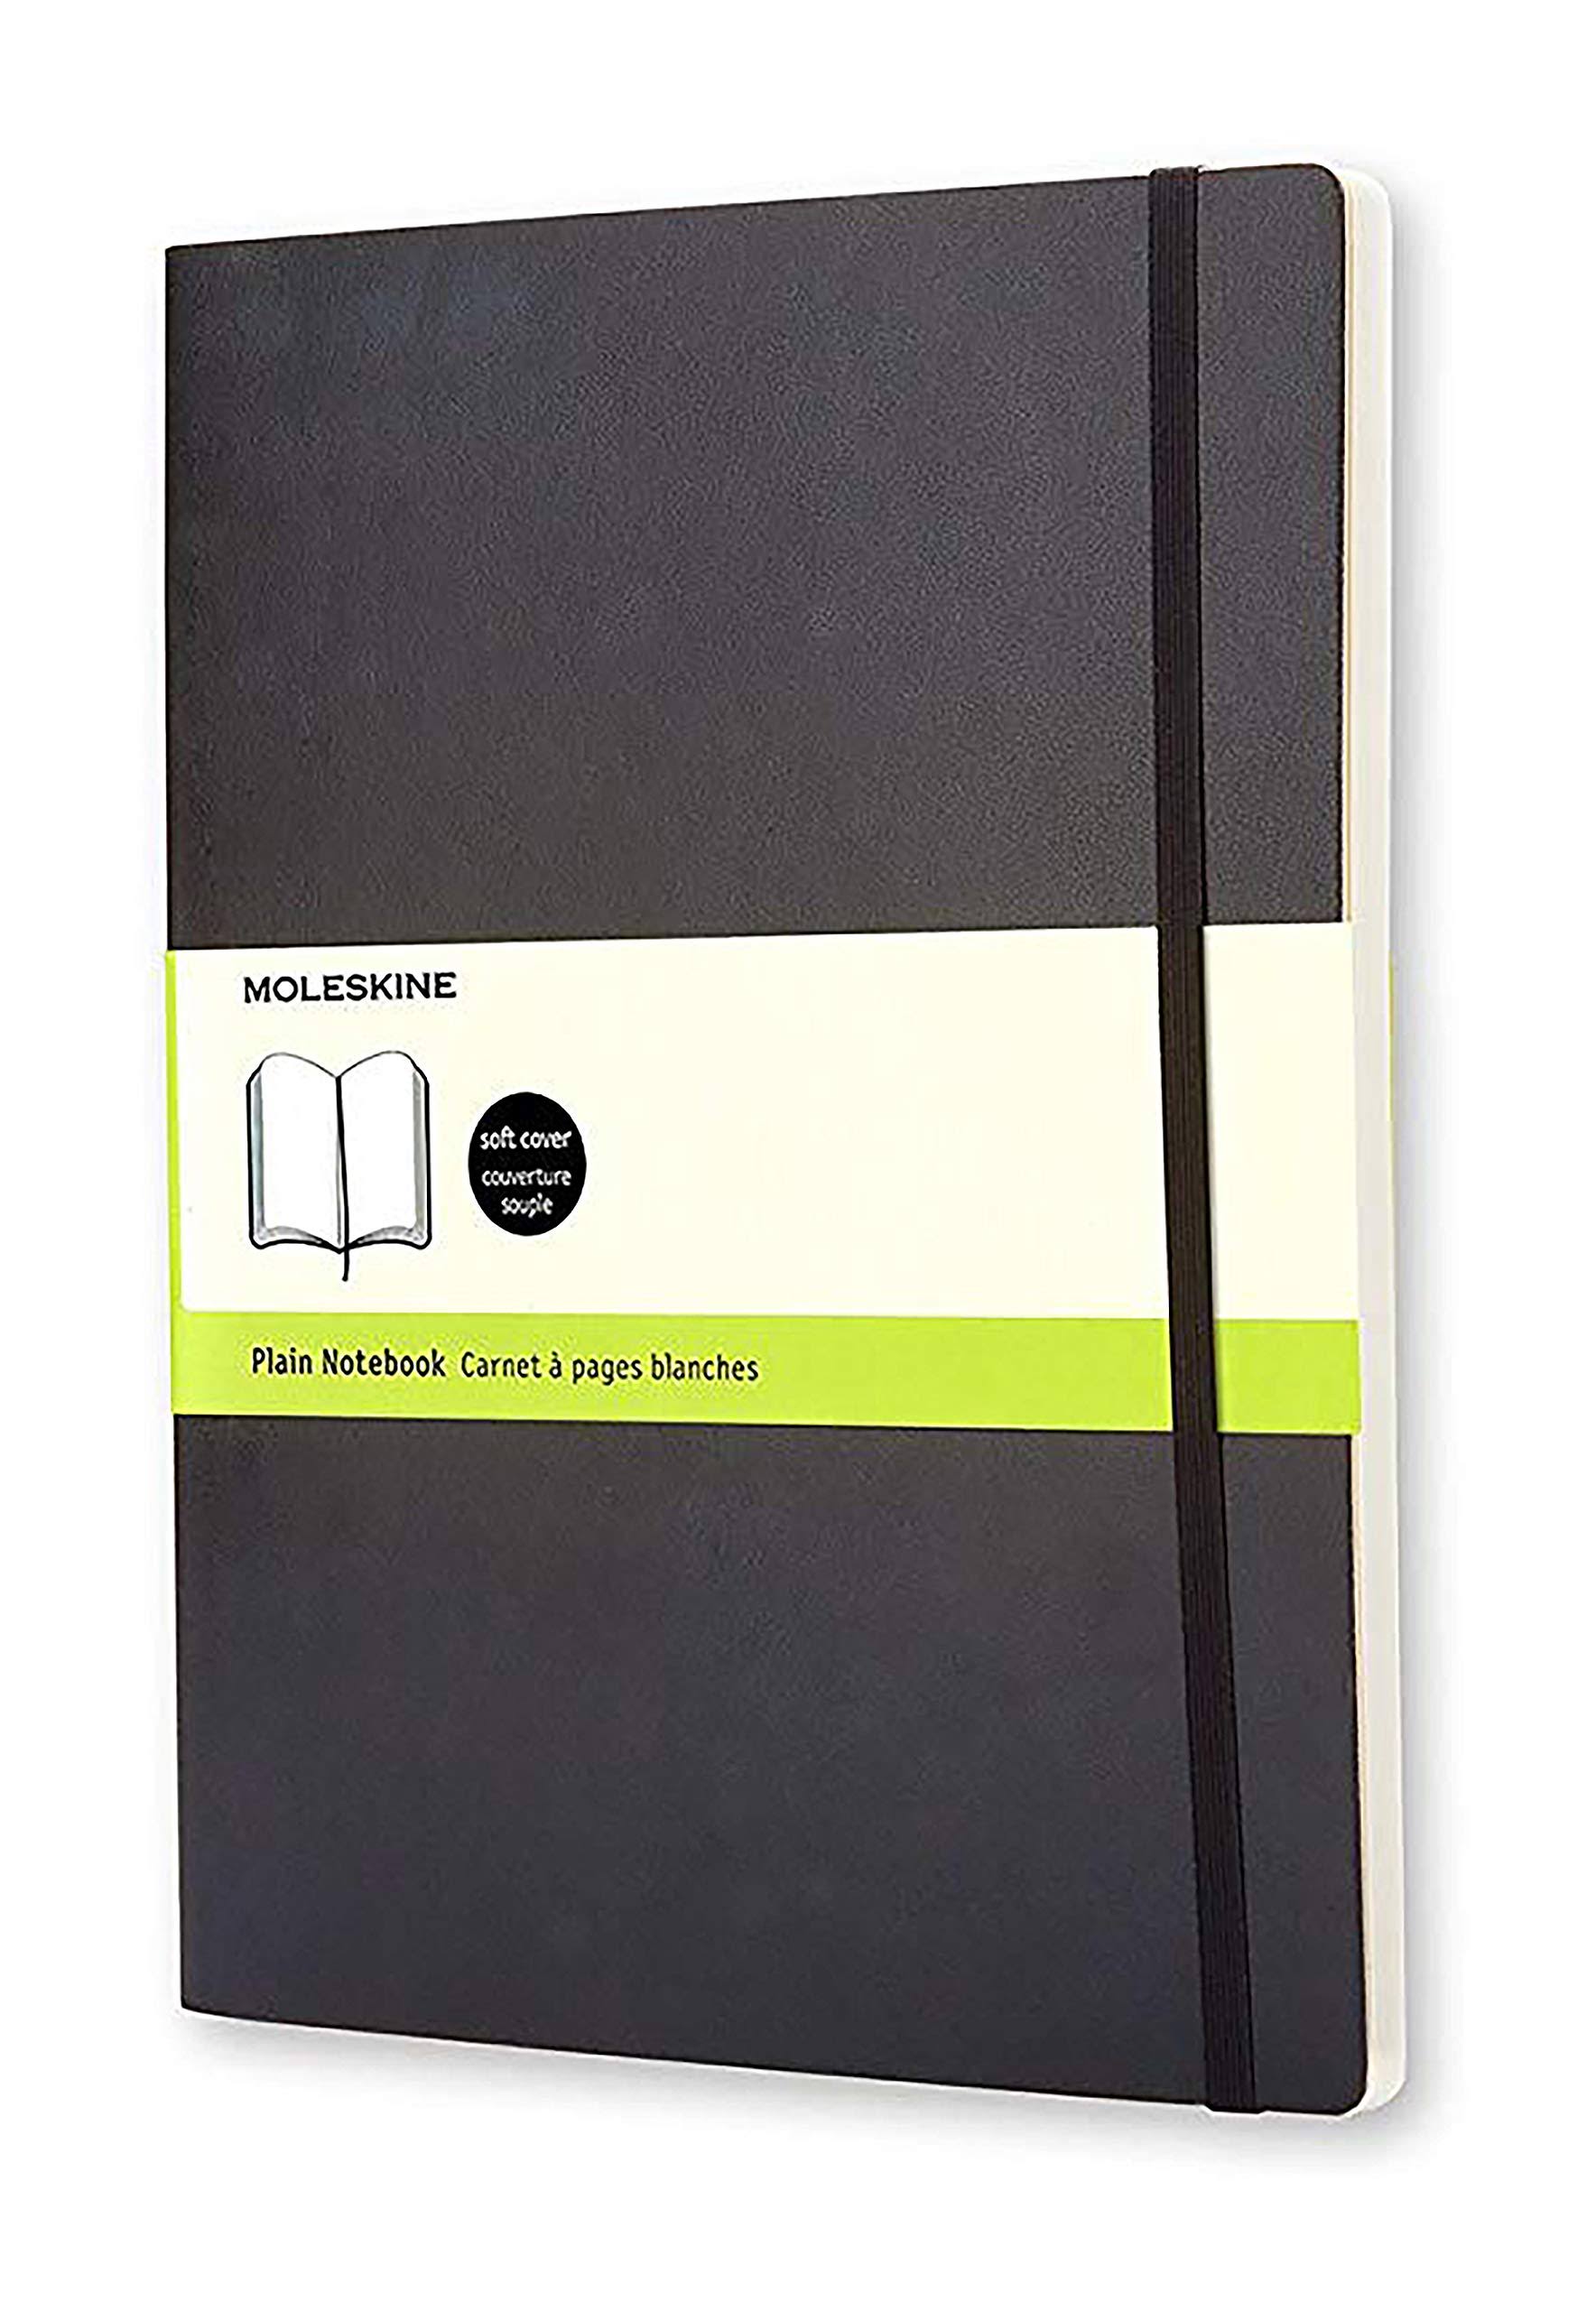 Moleskine Notebook - Black, Soft Cover, Plain